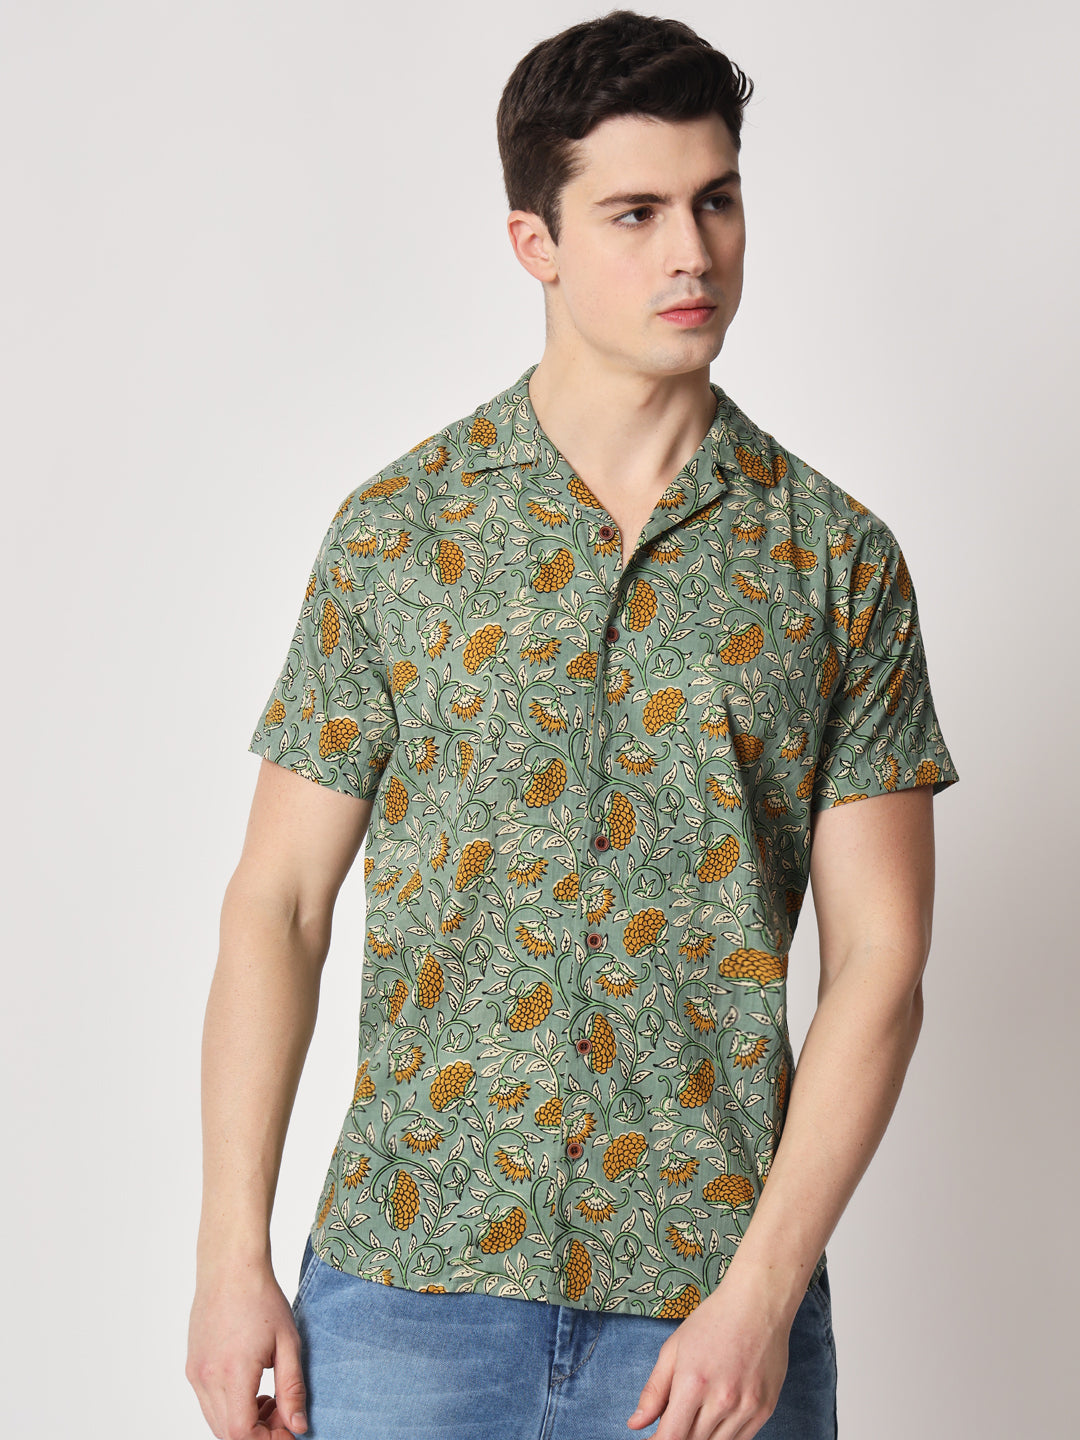 Firangi Yarn 100% Jaipuri Cotton Sanganeri Cheeku Pattern Cuban Collar Resort, Lounge Casual Shirt Pista Green